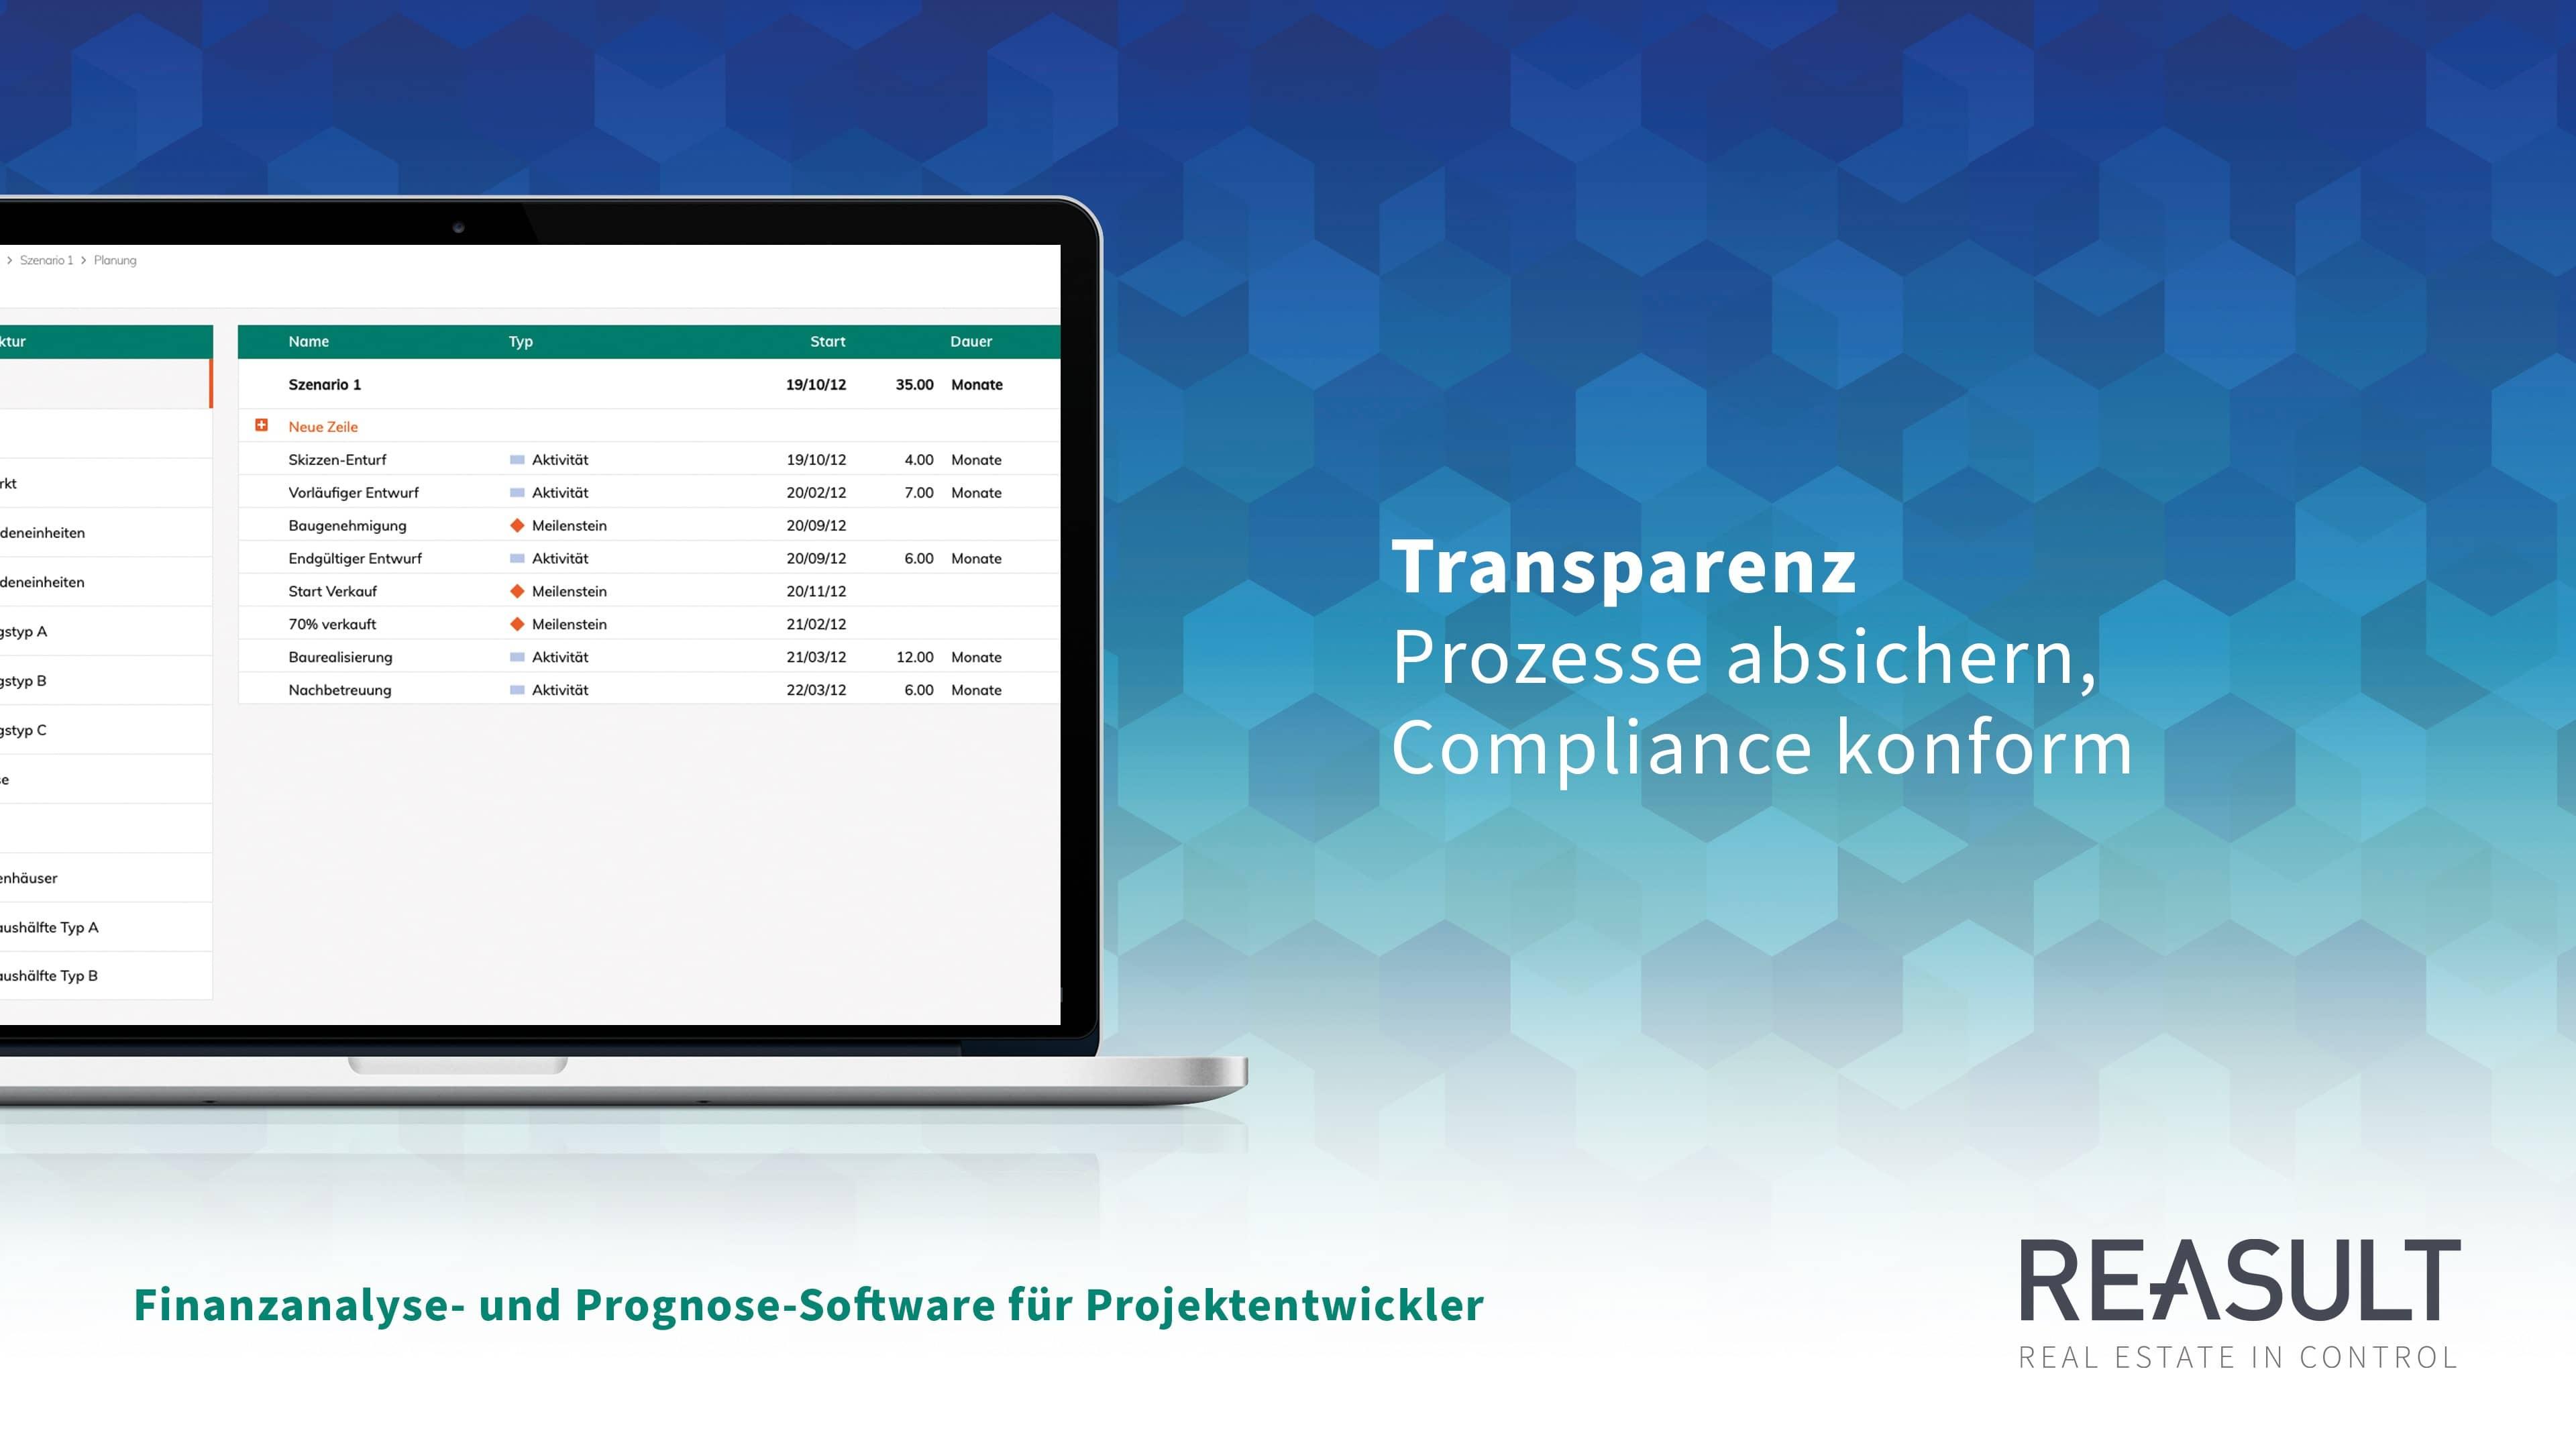 Reasult Projects - Transparenz: Prozesse absichern, Compliance konform.